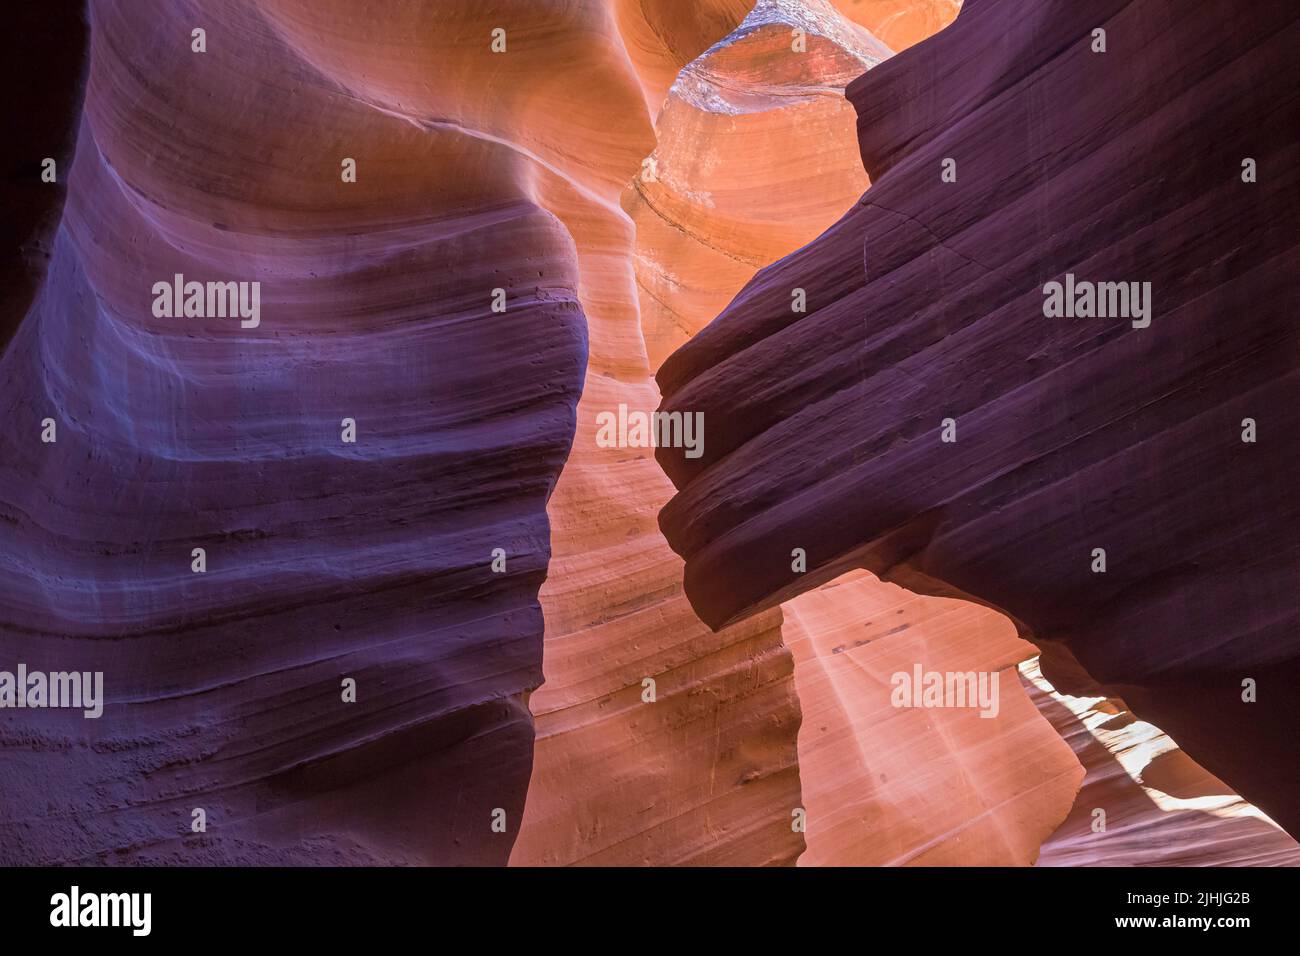 Borde afilado en Lower Antelope Canyon, Arizona, Estados Unidos. Foto de stock